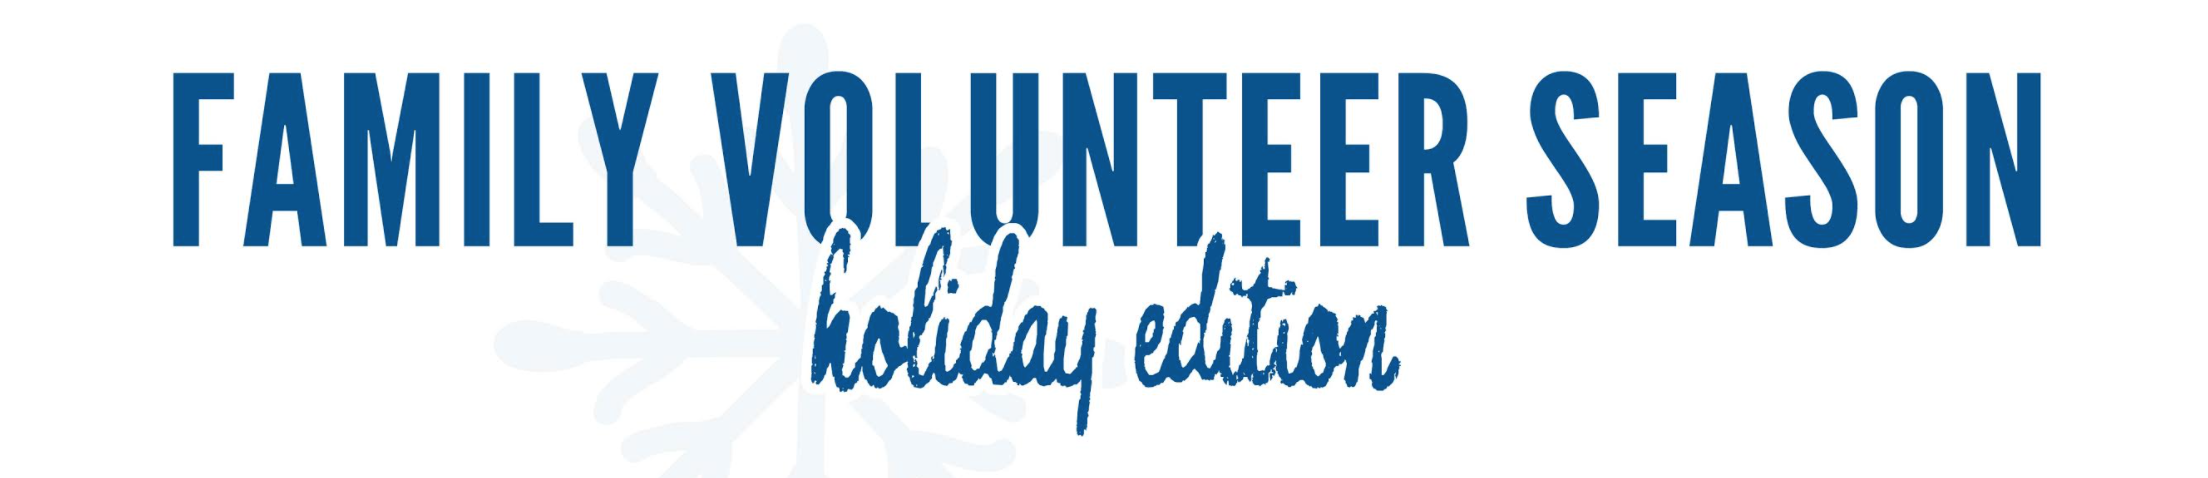 familly volunteer season holiday edition Image